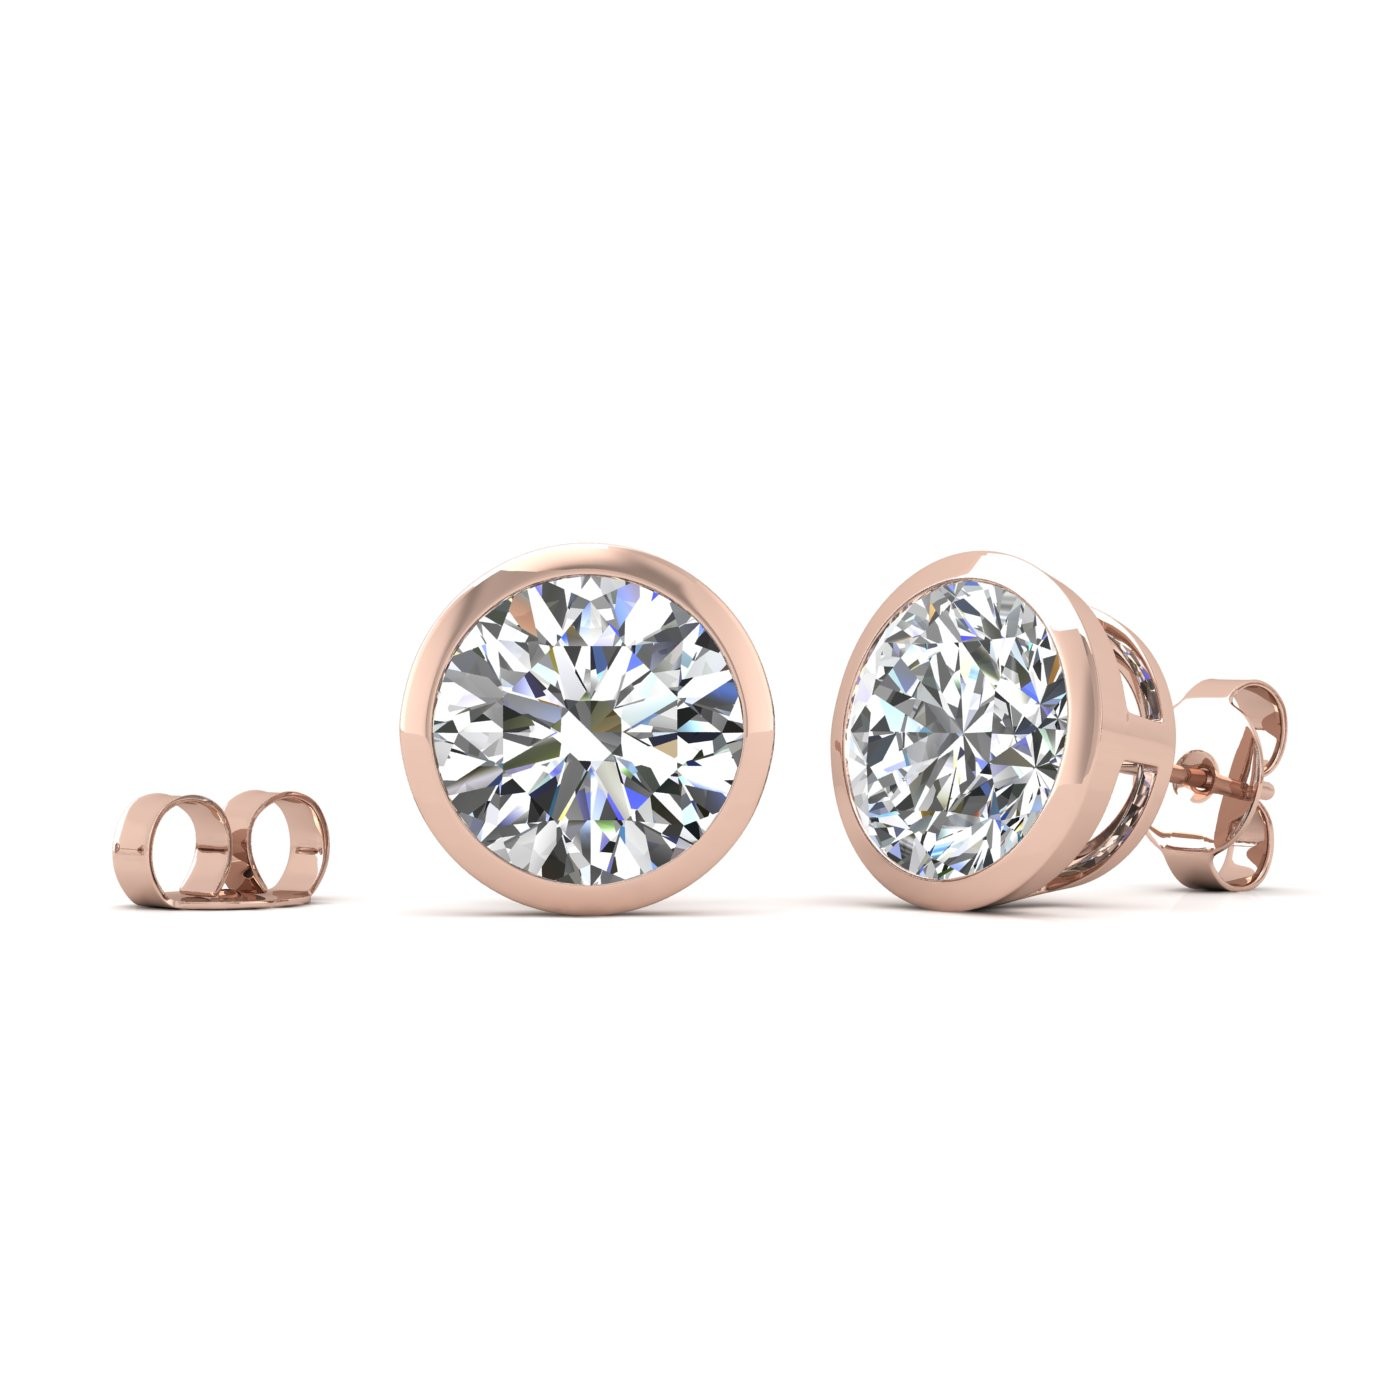 18k rose gold  0,7 ct each (1,4 tcw) round brilliant cut diamond bezel set earring studs Photos & images